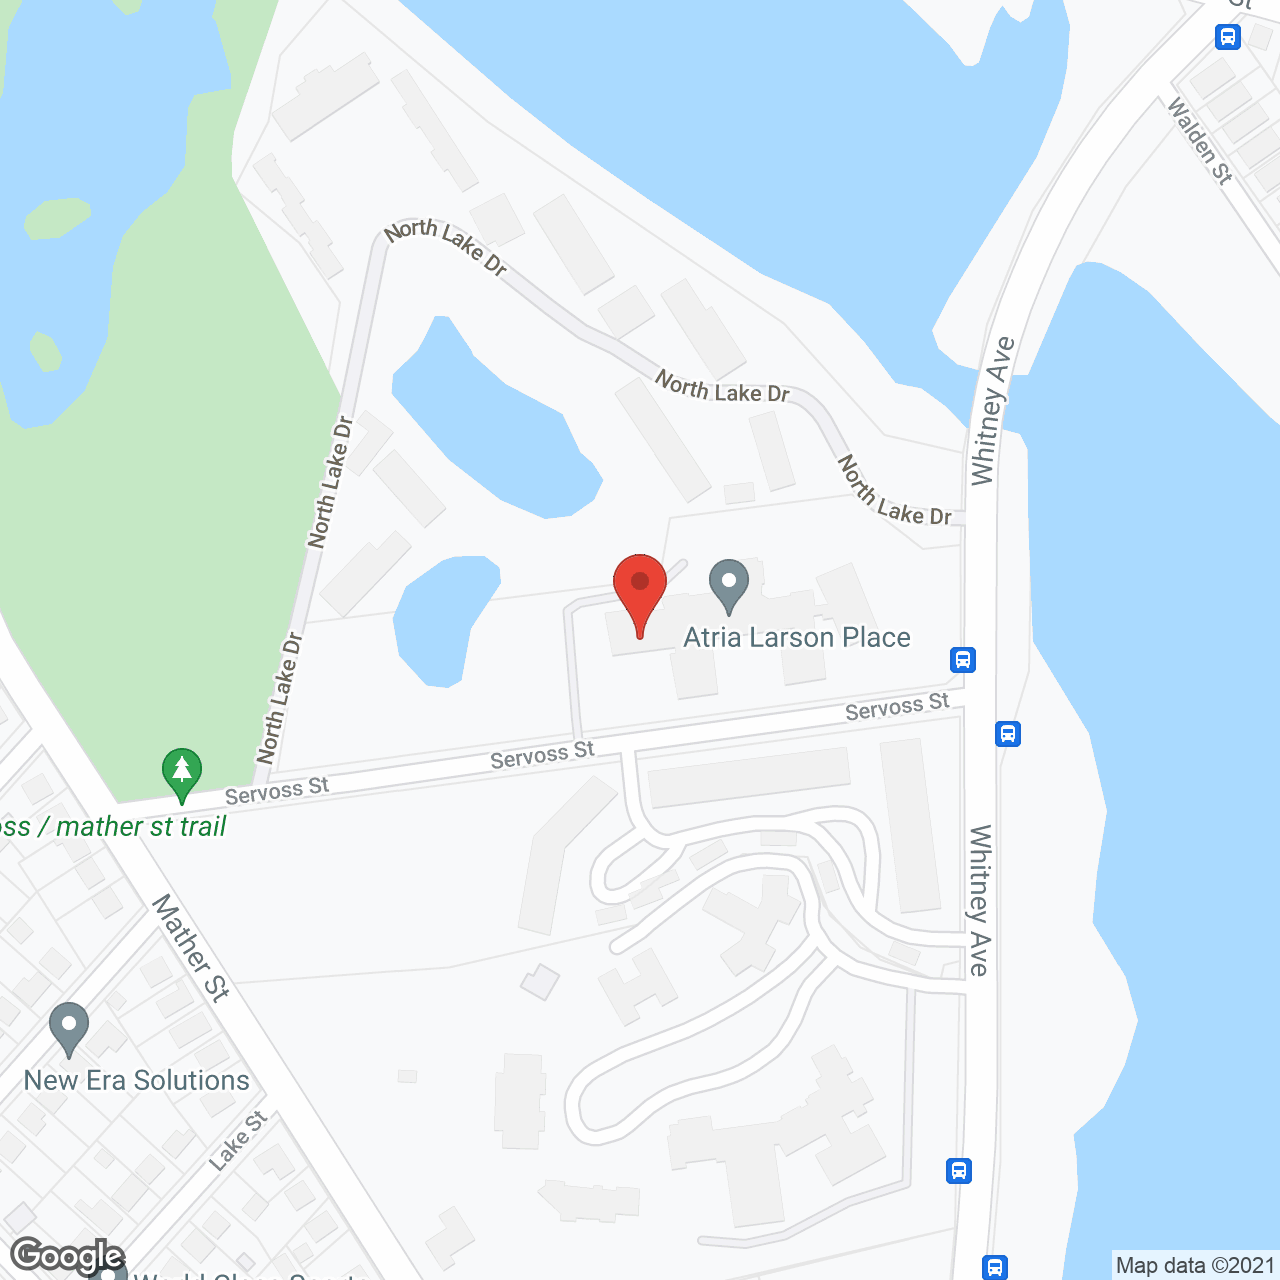 Atria Larson Place in google map